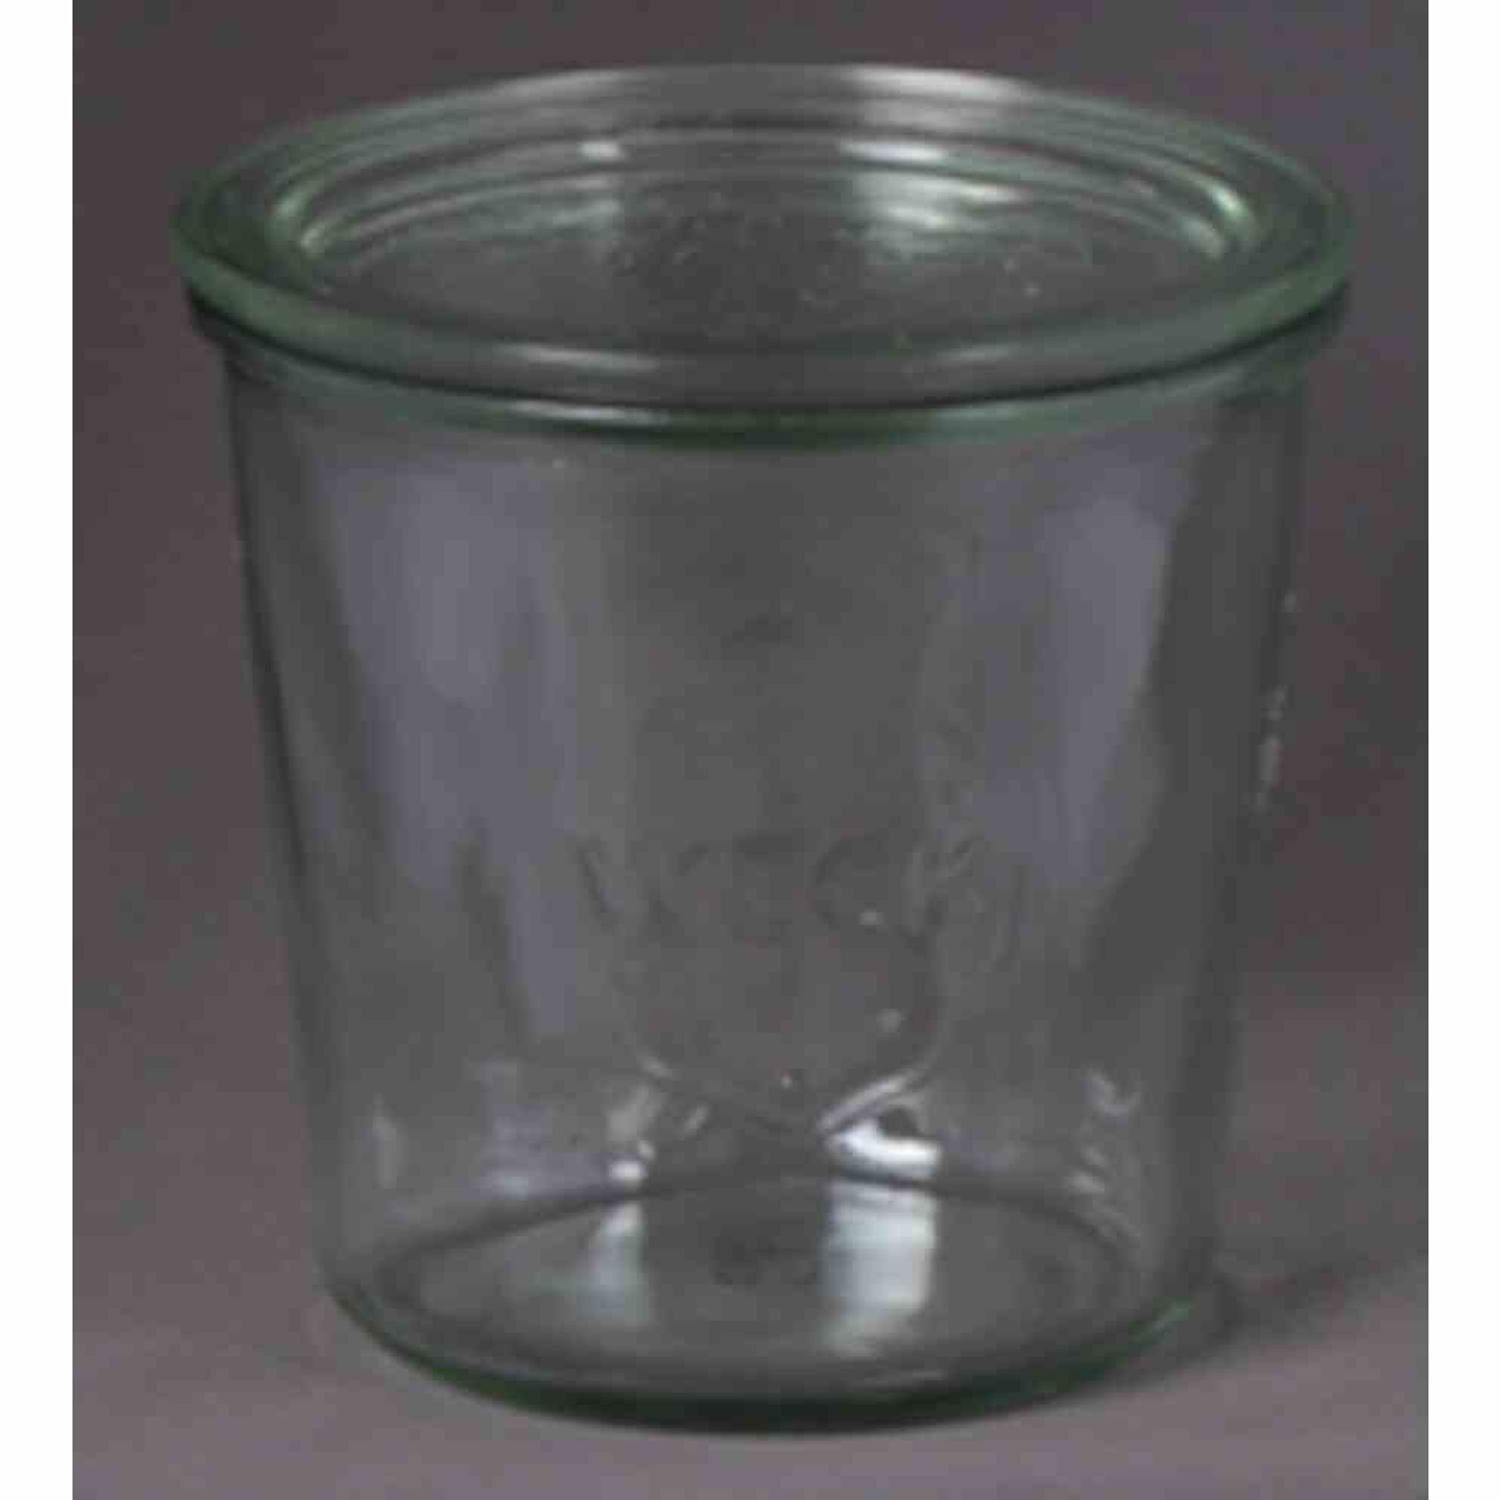 Siena Home Rundrand ml Rundrand-Deckel, Vorratsdose Weck-Glas, Glas 580 Sturz-Glas "Cucinare"